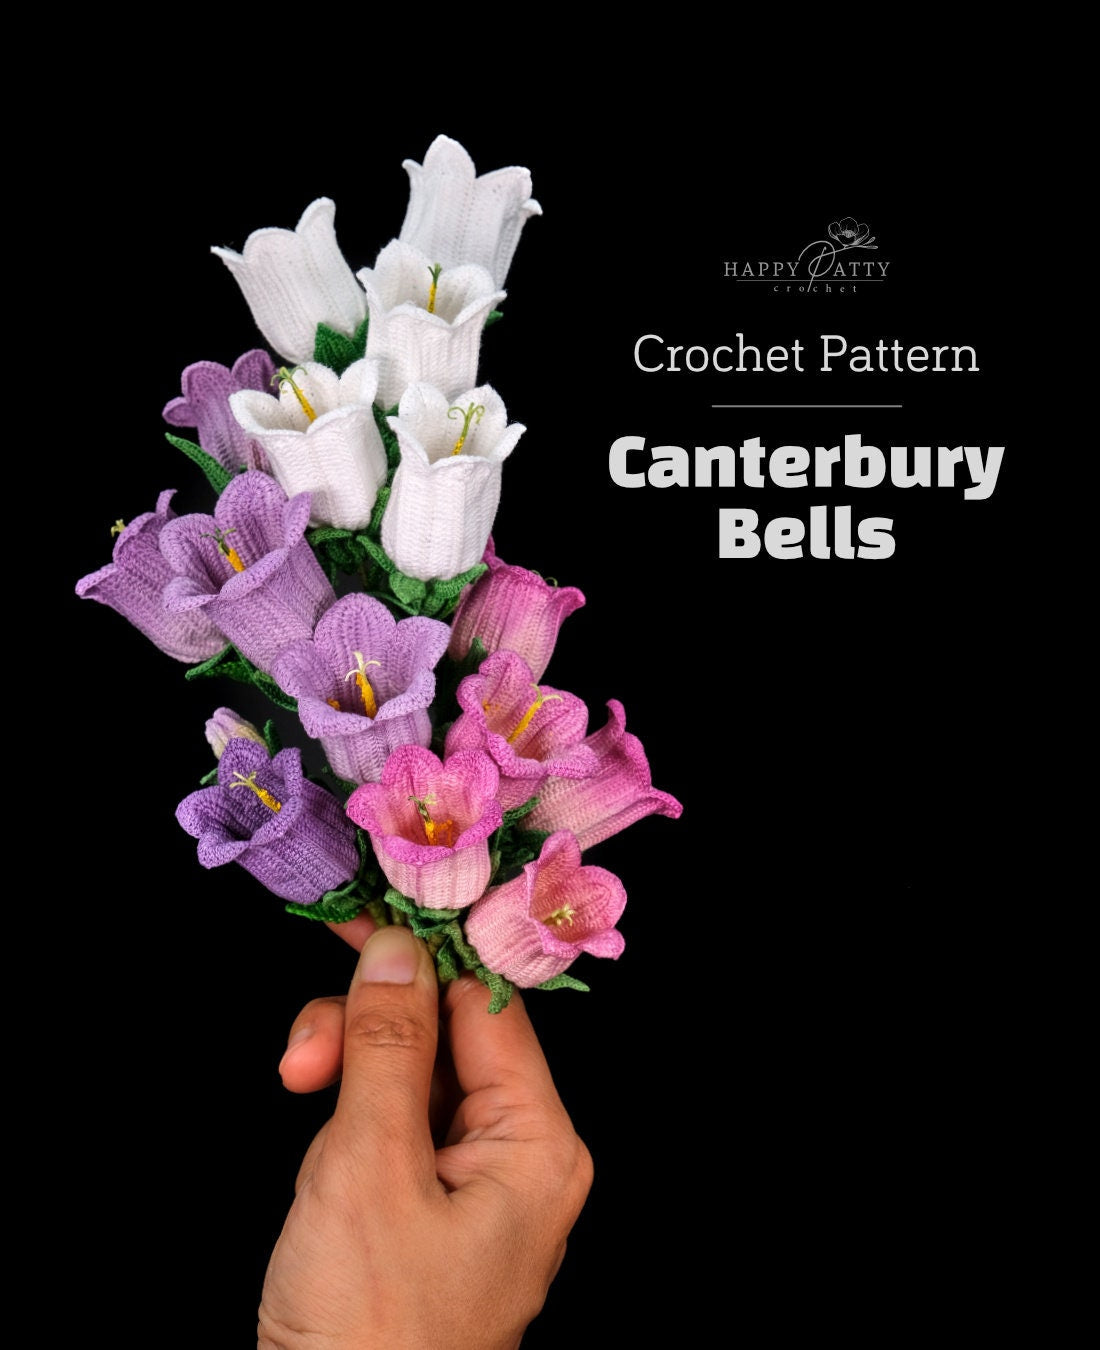 Crochet Canterbury Bells Flower Pattern - Crochet Pattern for Crochet Bellflowers (Campanula Medium)